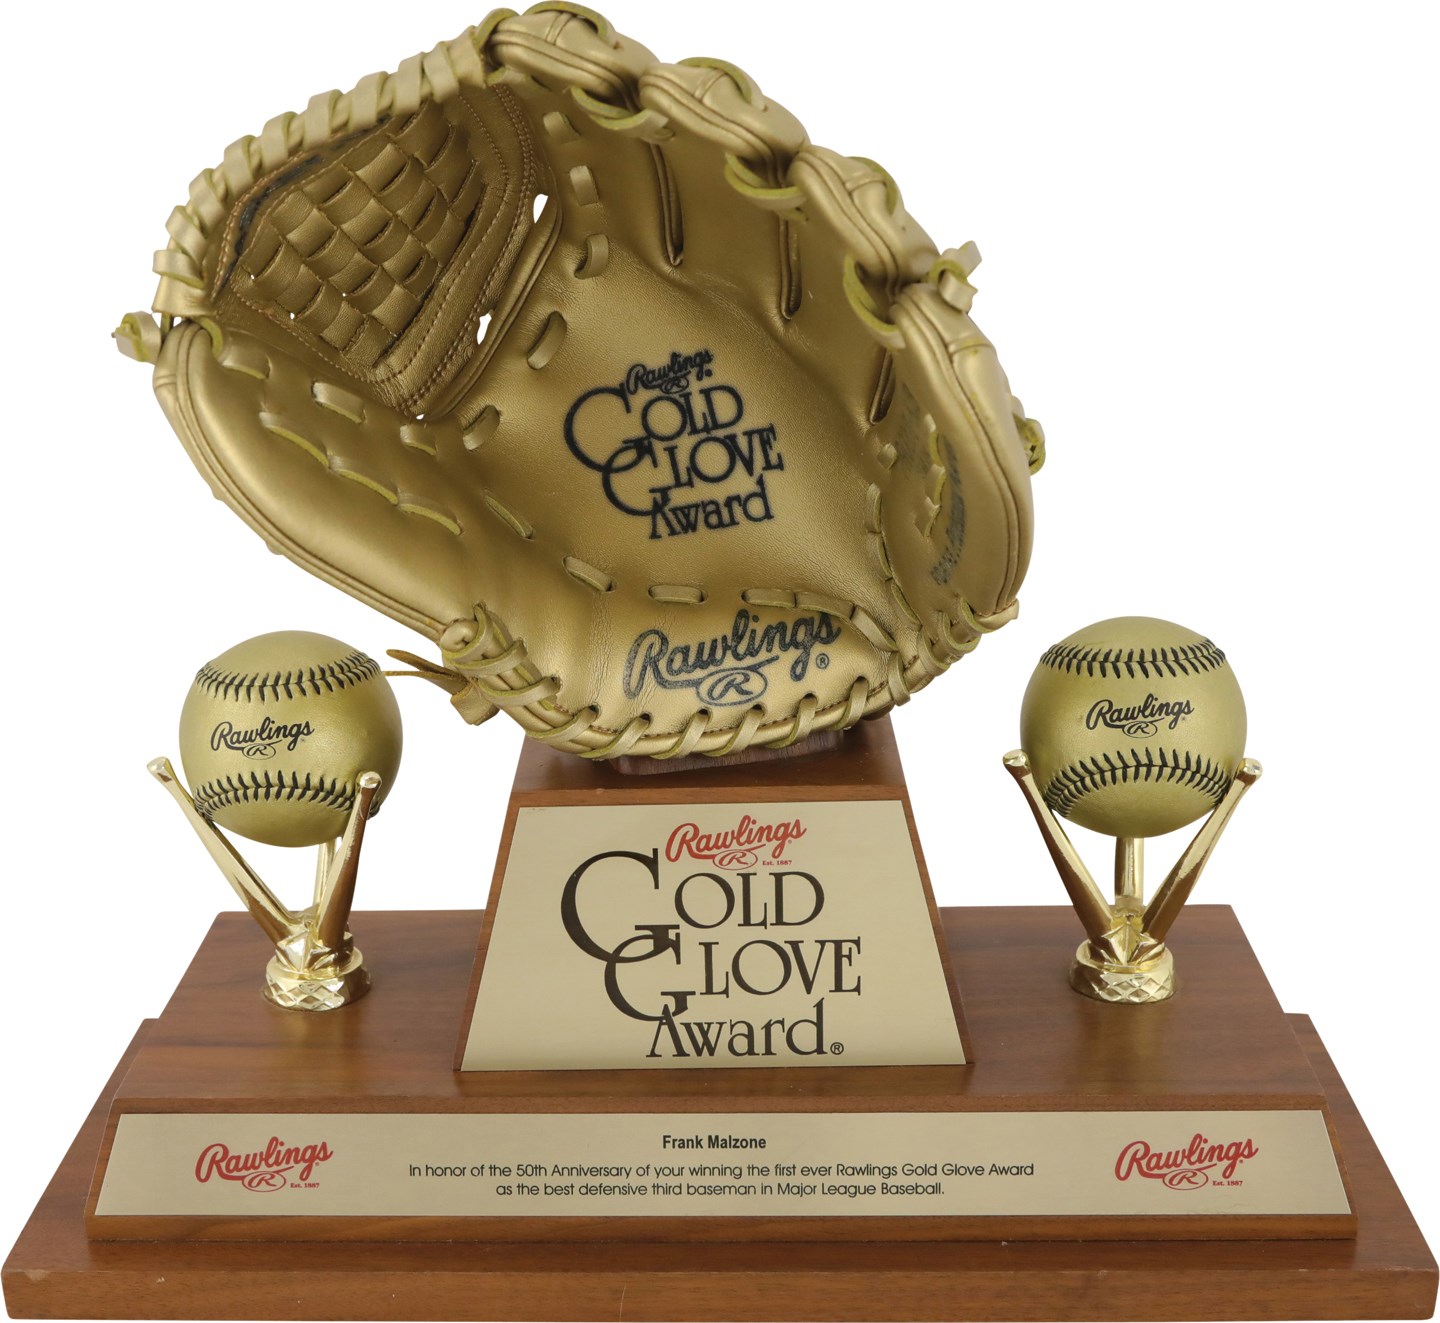 - Frank Malzone 50th Anniversary Gold Glove Award Presented by Rawlings